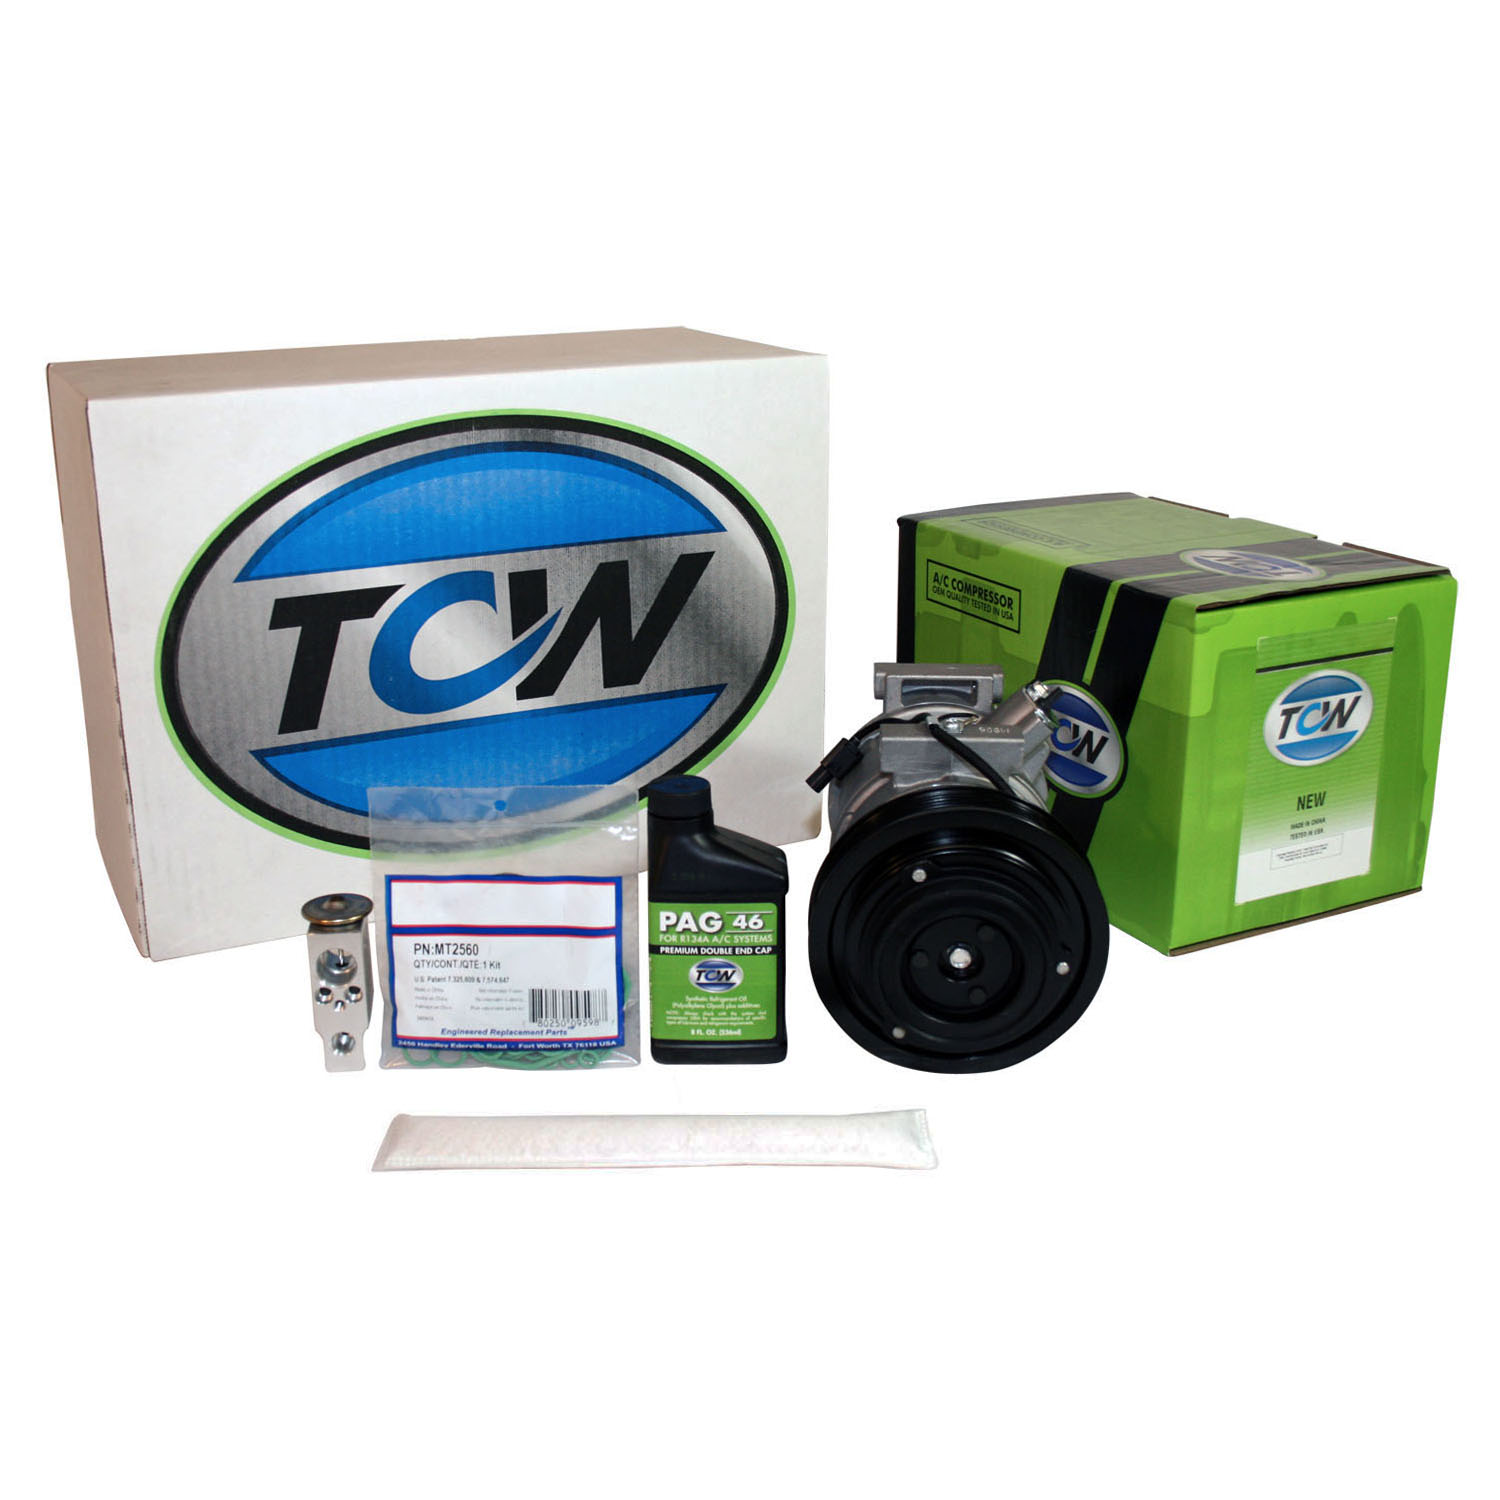 TCW Vehicle A/C Kit K1000402N New Product Image field_60b6a13a6e67c